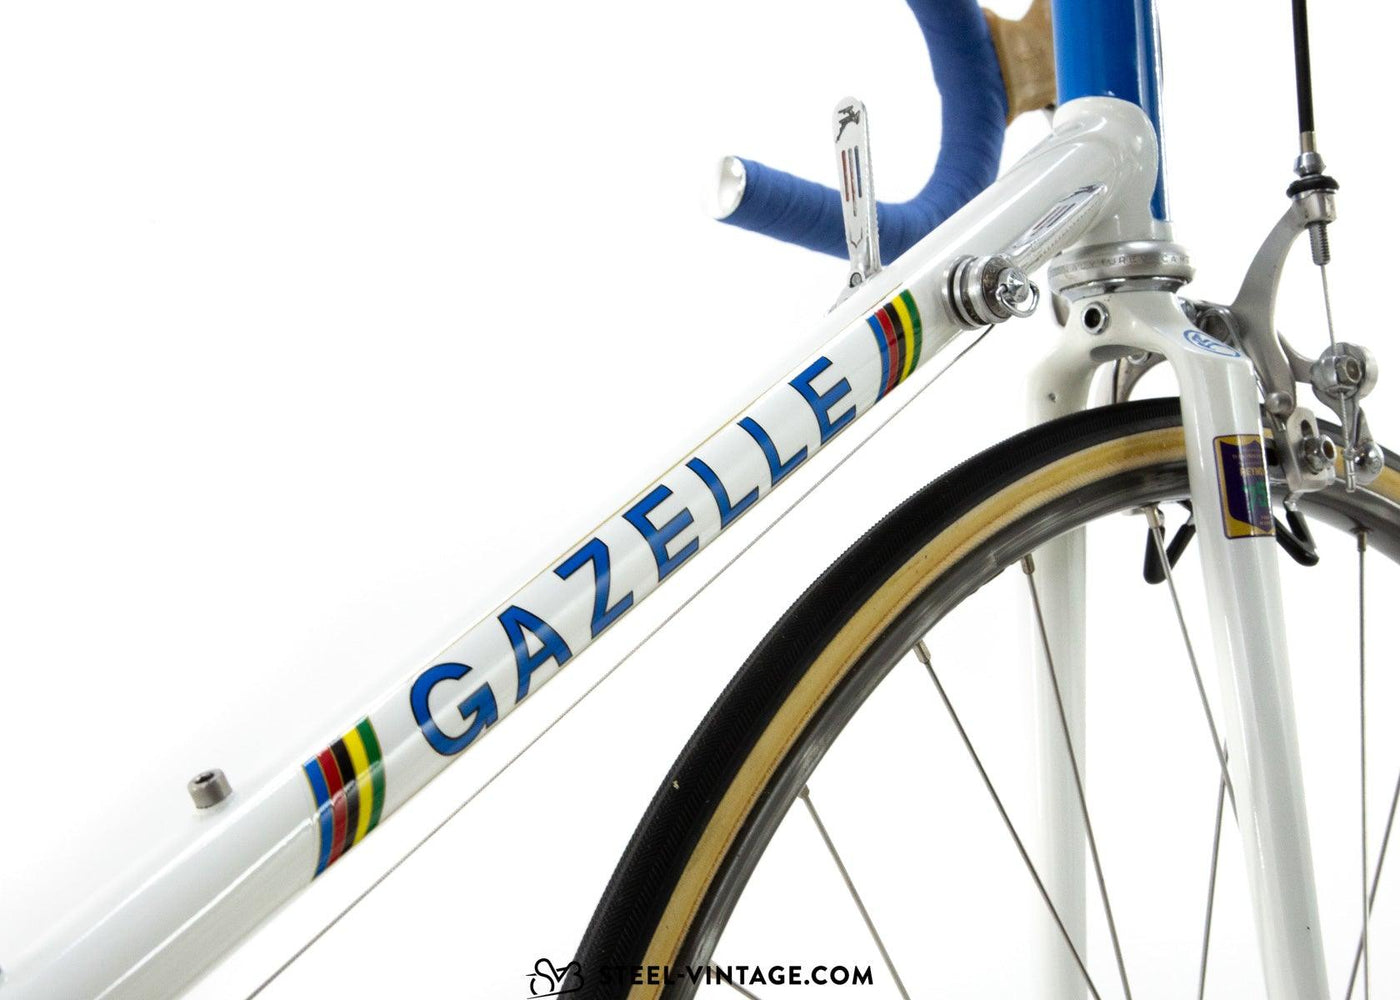 Gazelle Champion Mondial 753 Road Bicycle 1980s - Steel Vintage Bikes